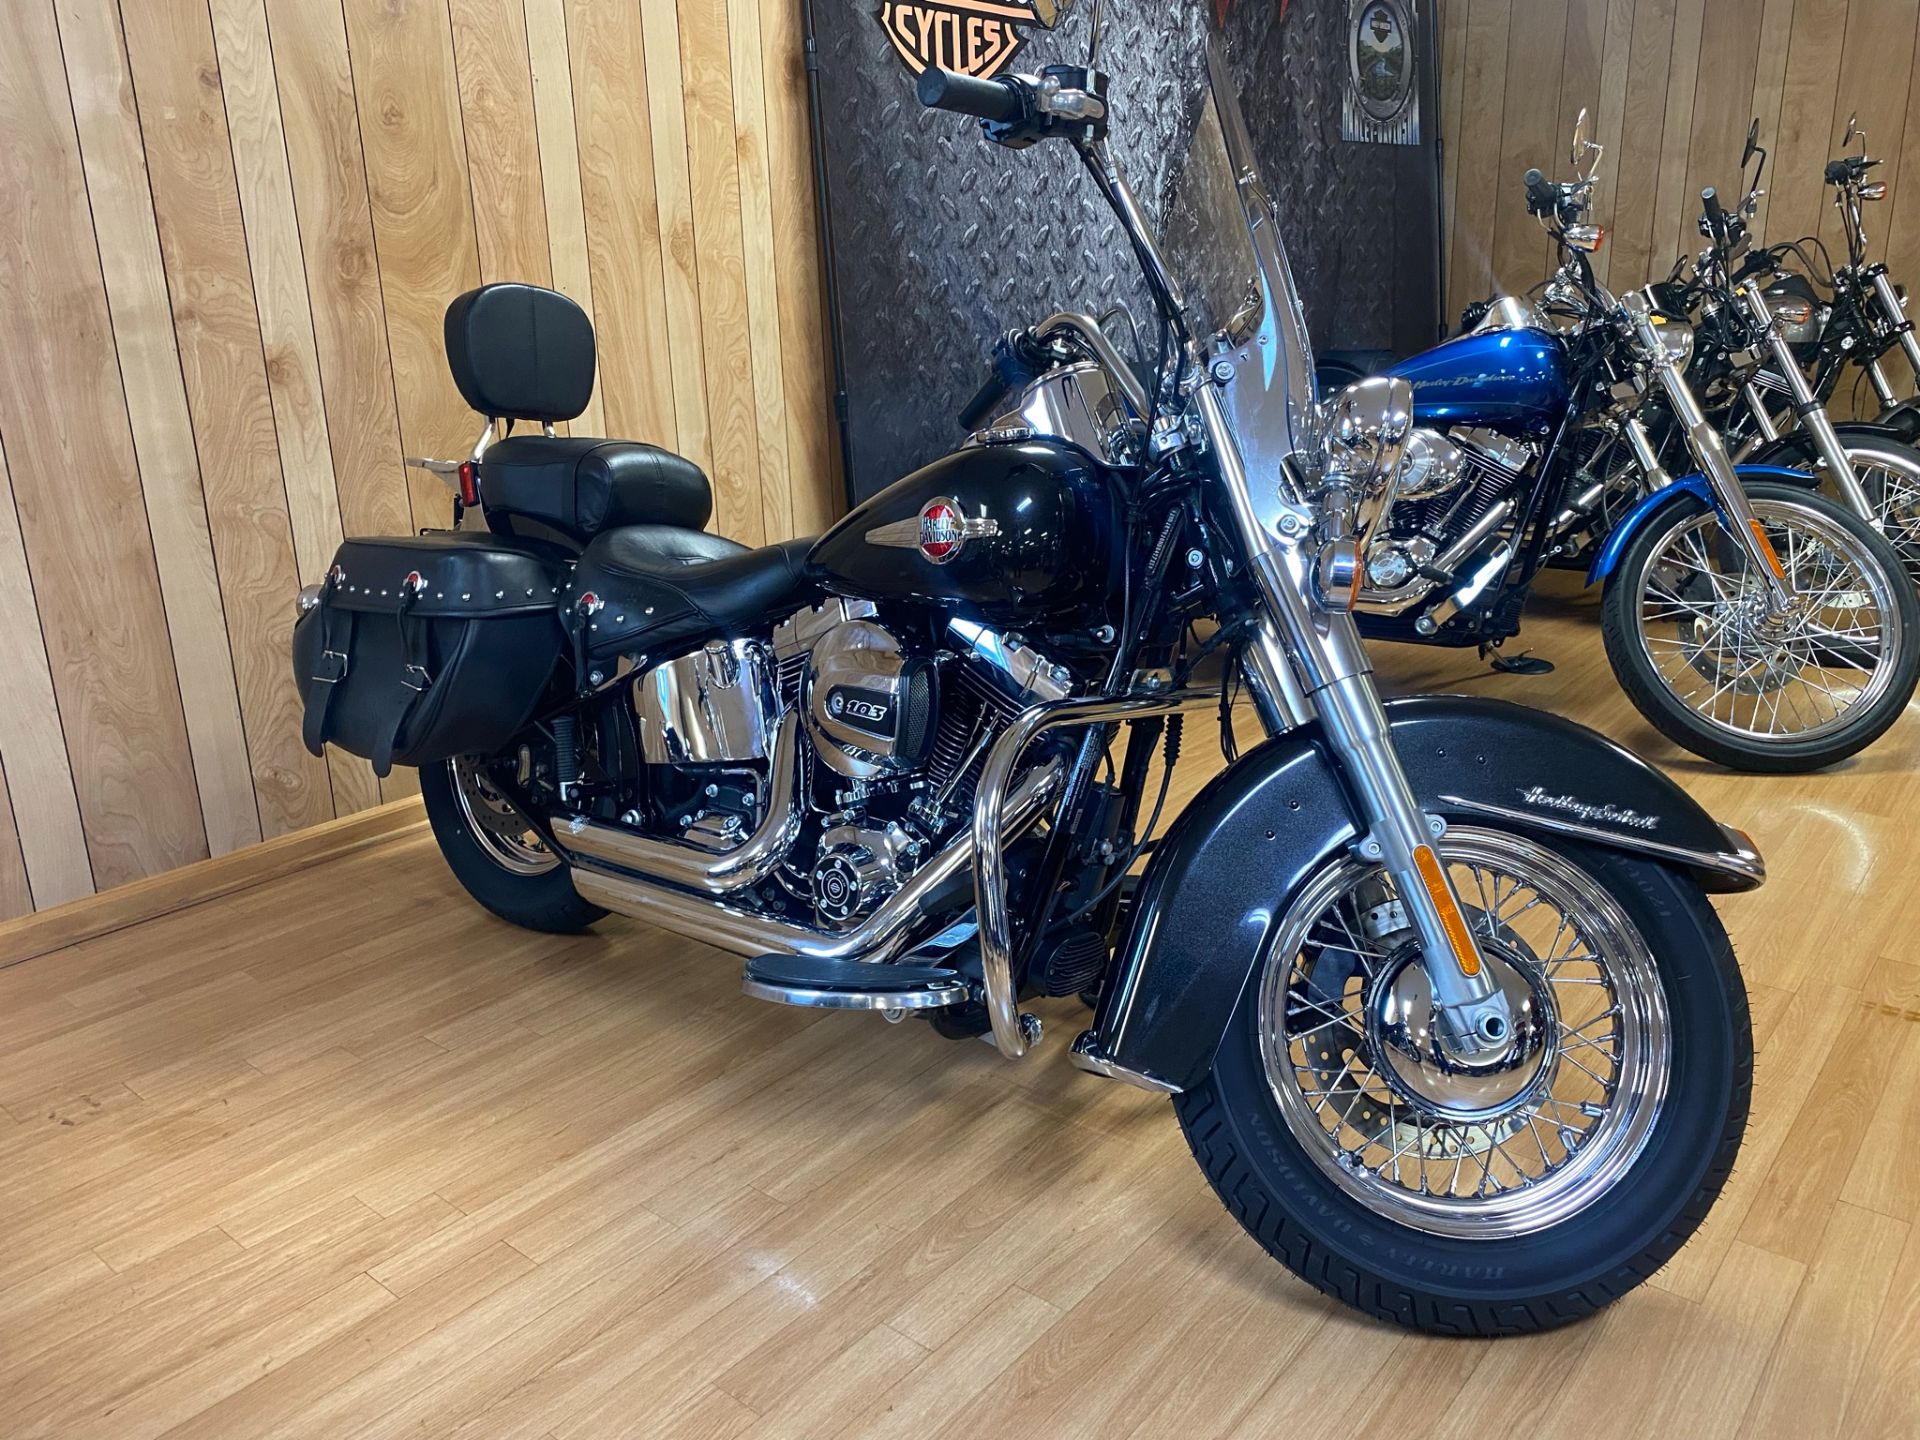 New 2017 Harley Davidson Heritage Softail Classic Black Quartz Motorcycles In Orange Va 042718